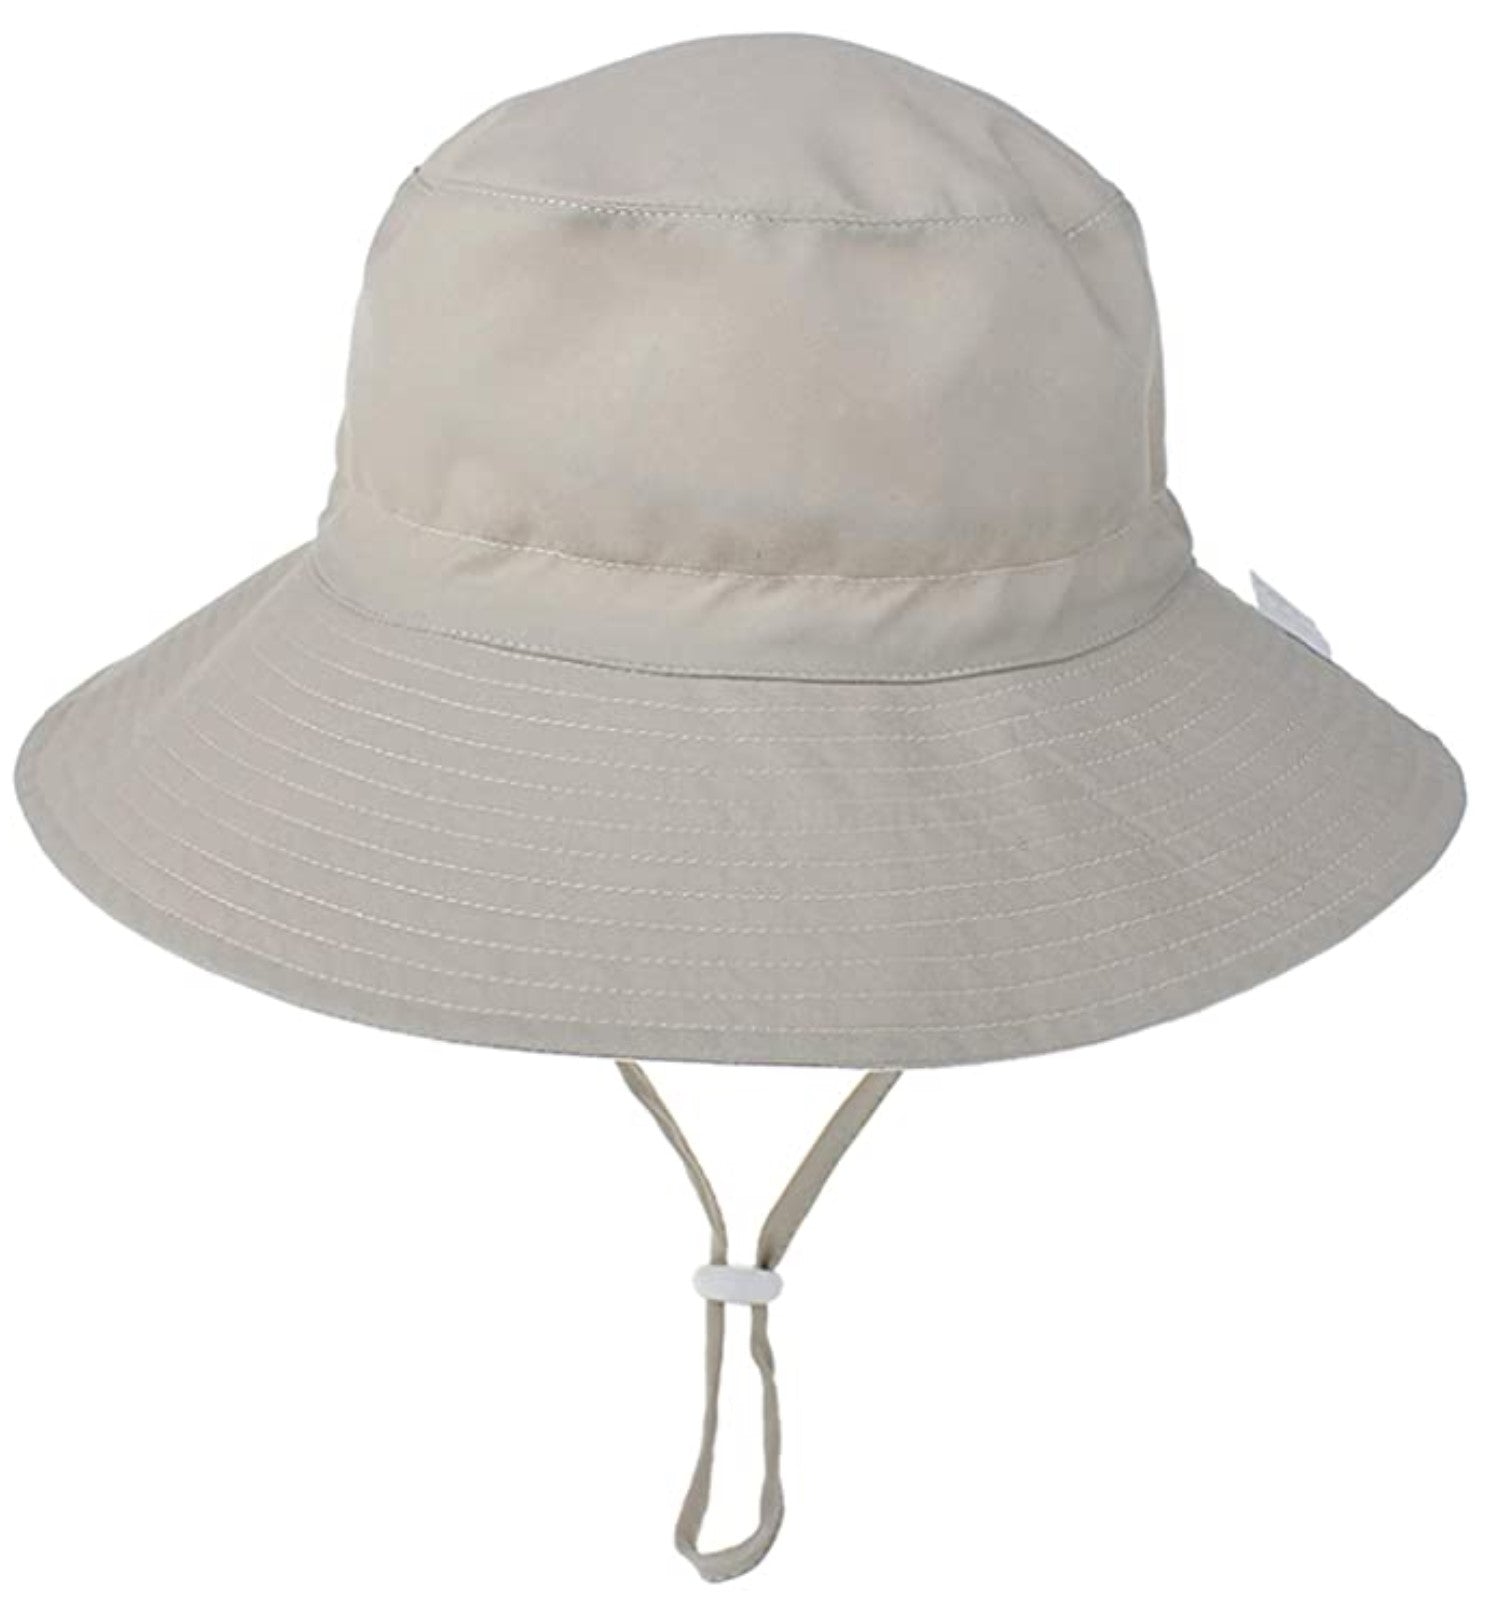 Toddler, Sun Protection Bucket Hat (Khaki)